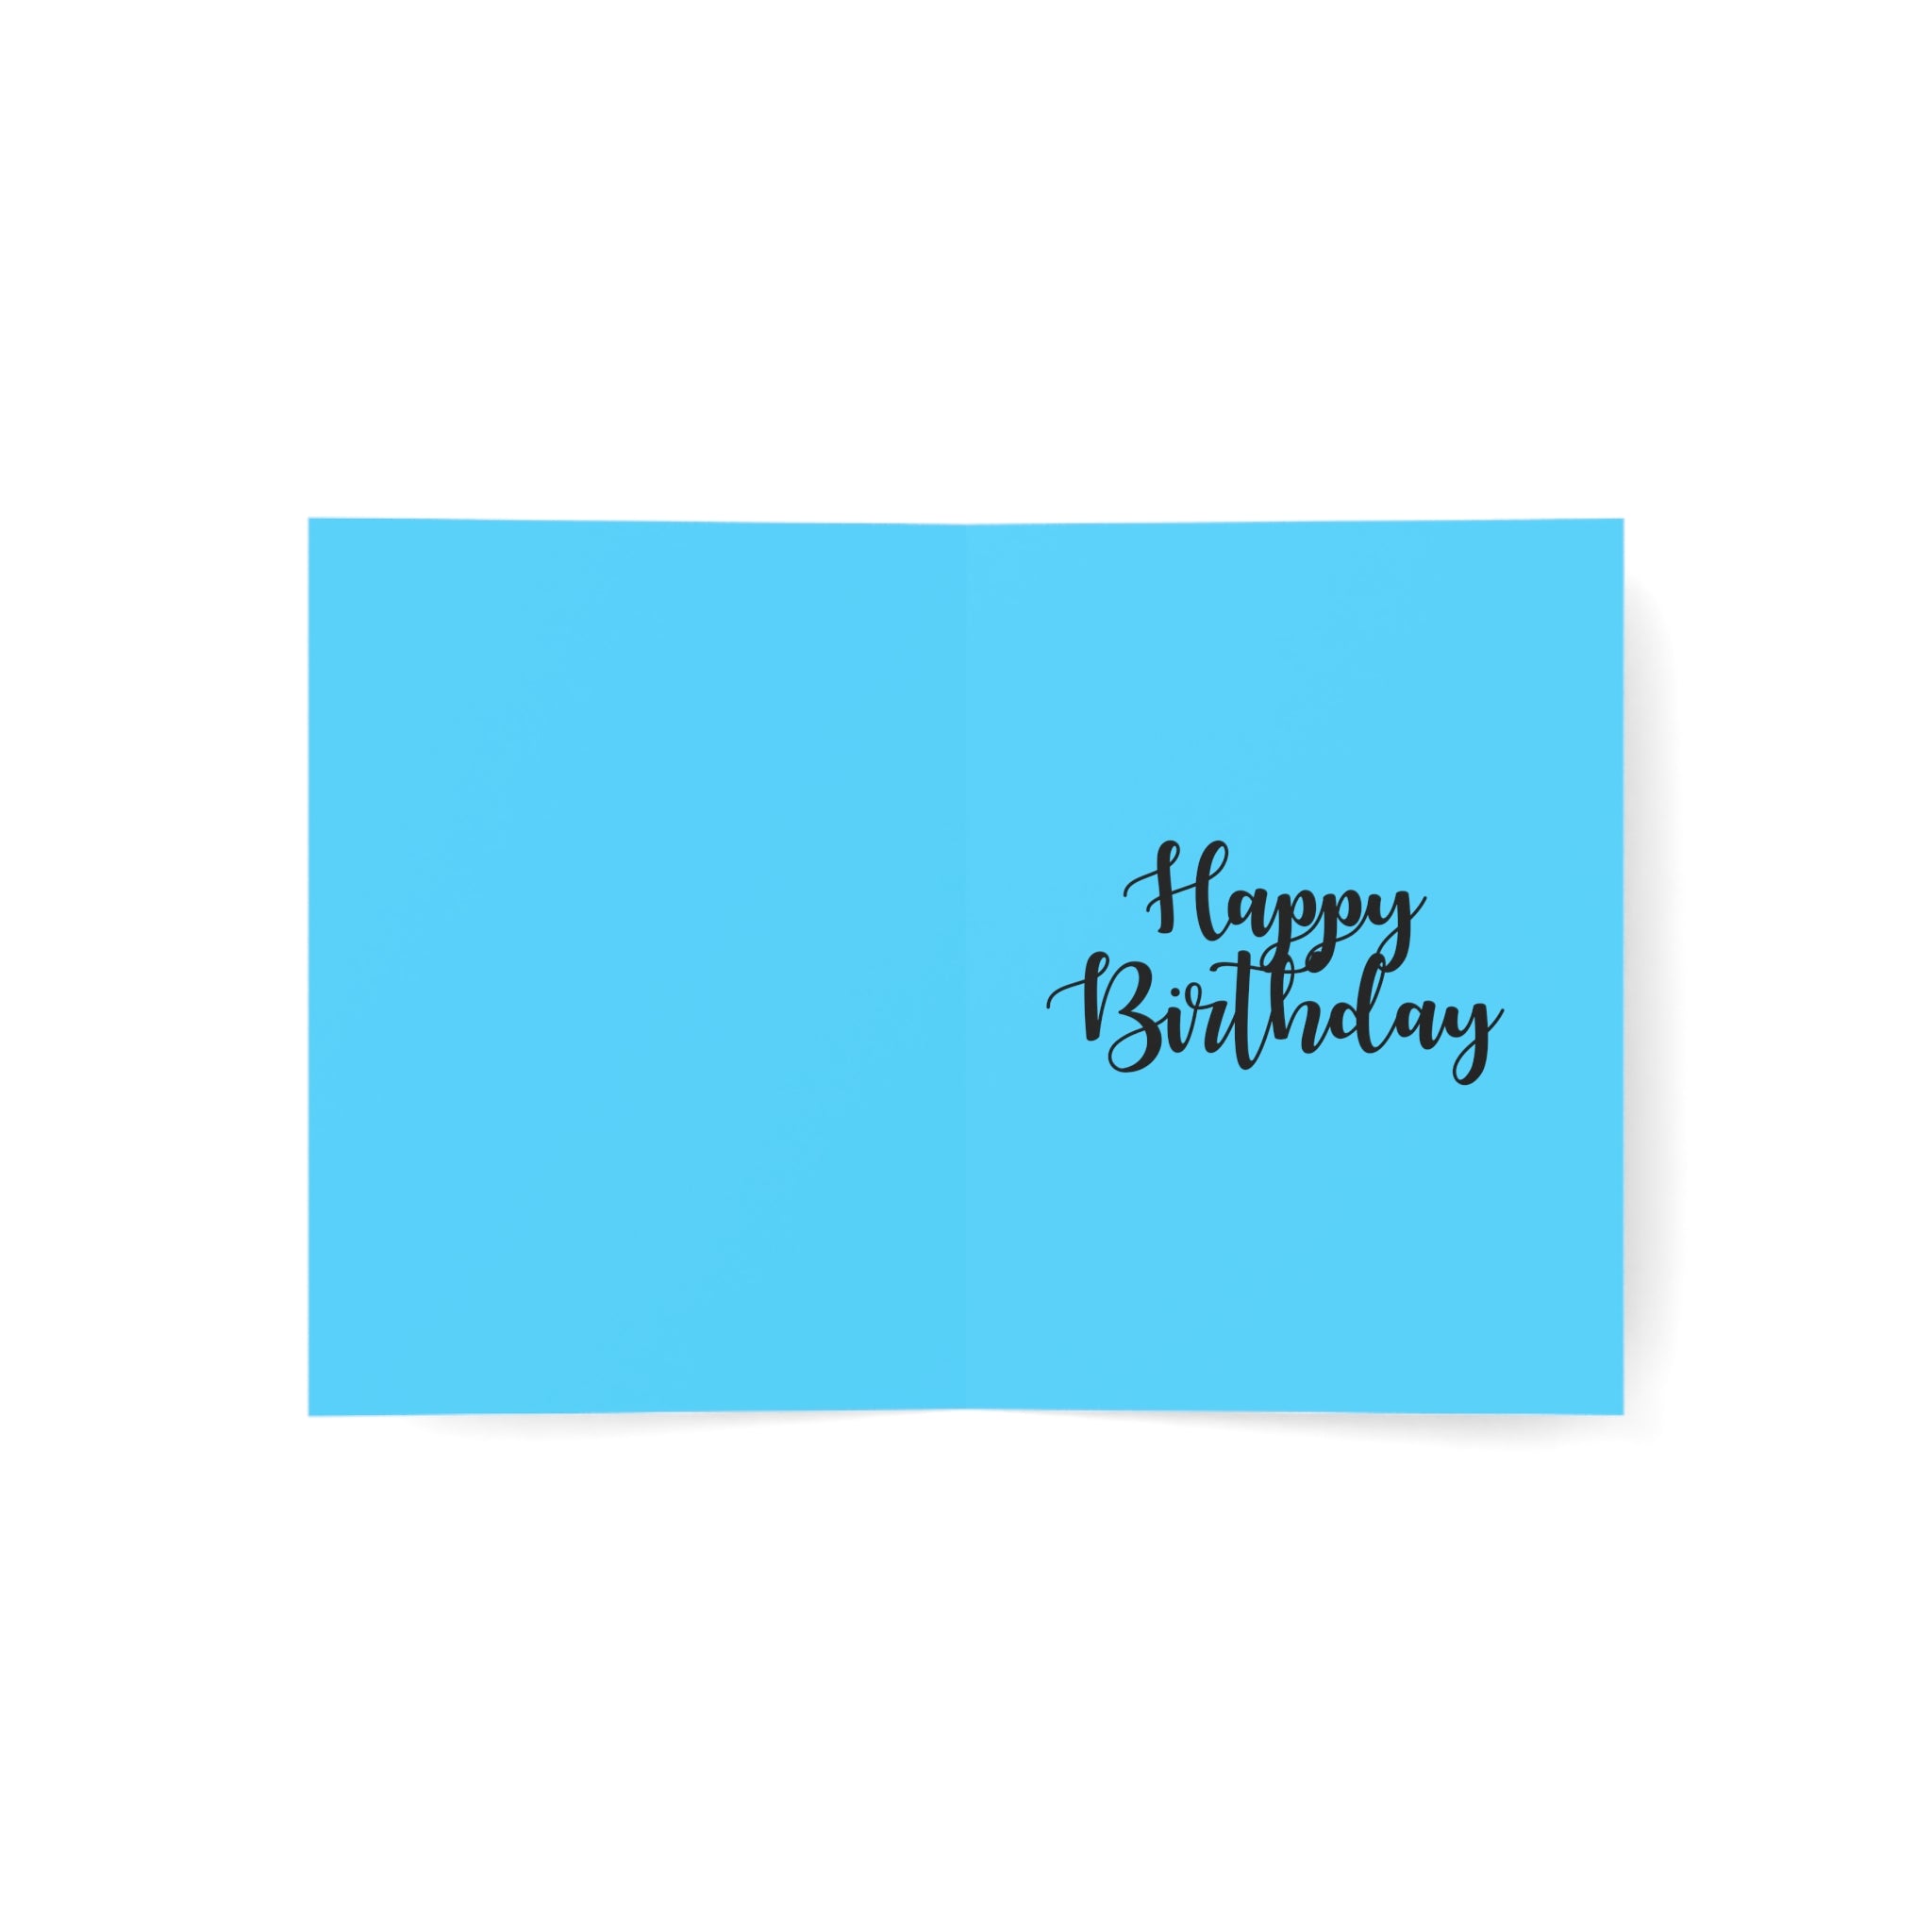 Schitt's Creek Happy Birthday Greeting Cards (1, 10, 30, and 50pcs)